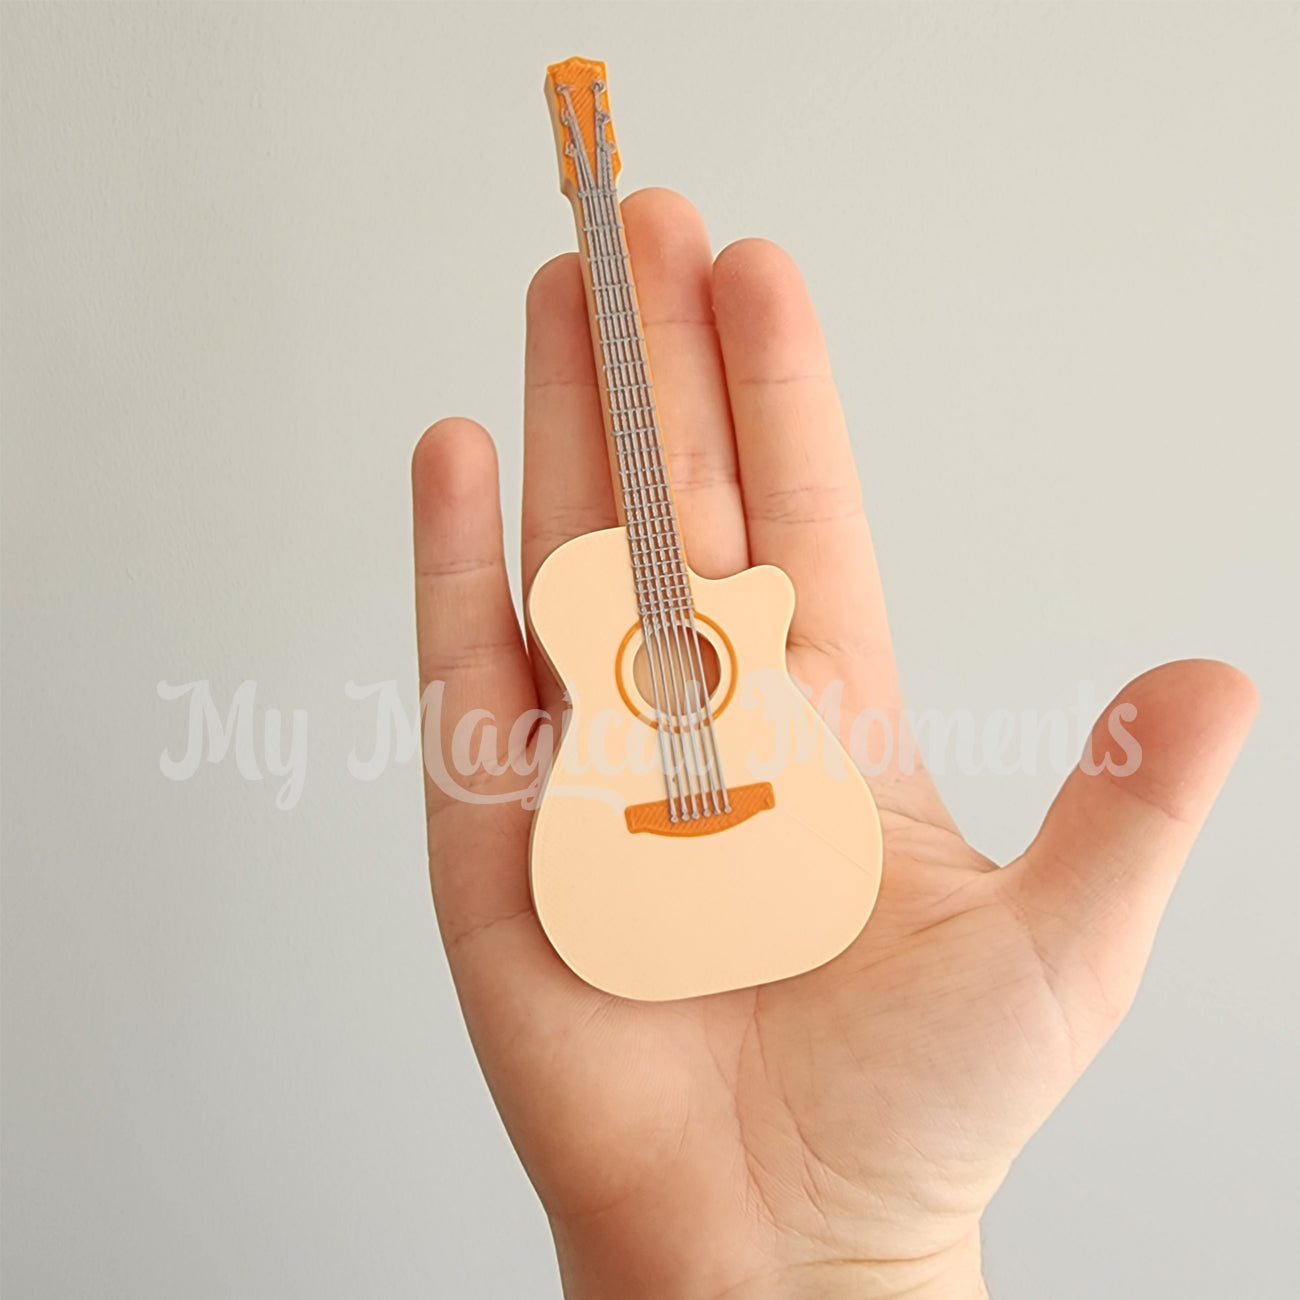 Miniature 3d printed guitar comparison to human hands